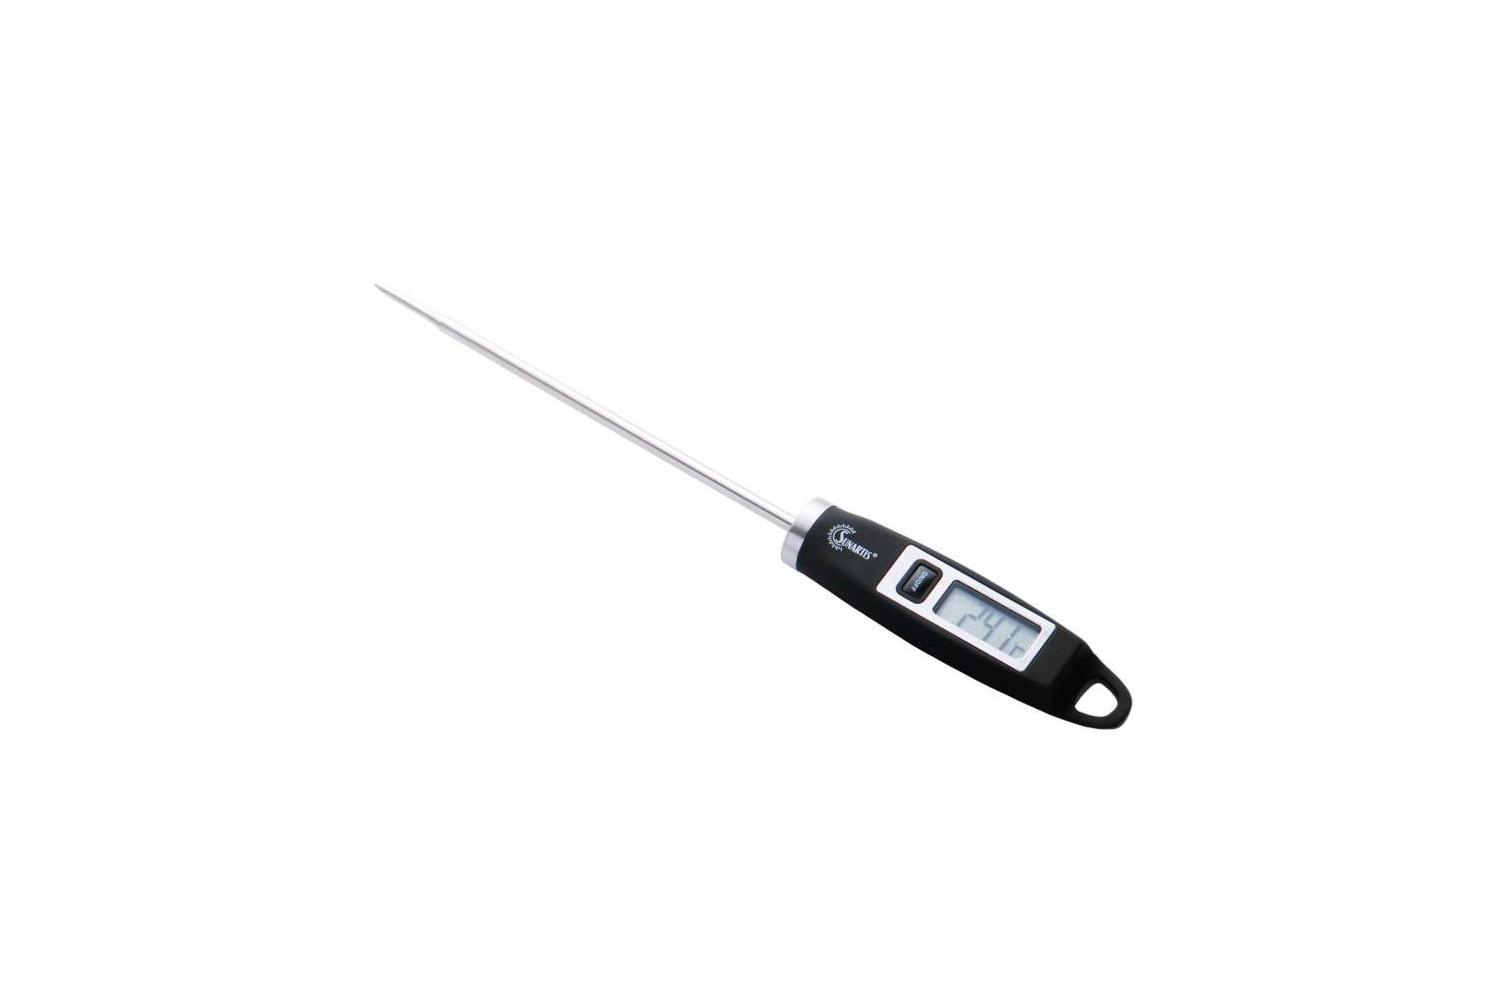 [SUNARTIS] digitales Bratenthermometer E514 20 x 2 cm